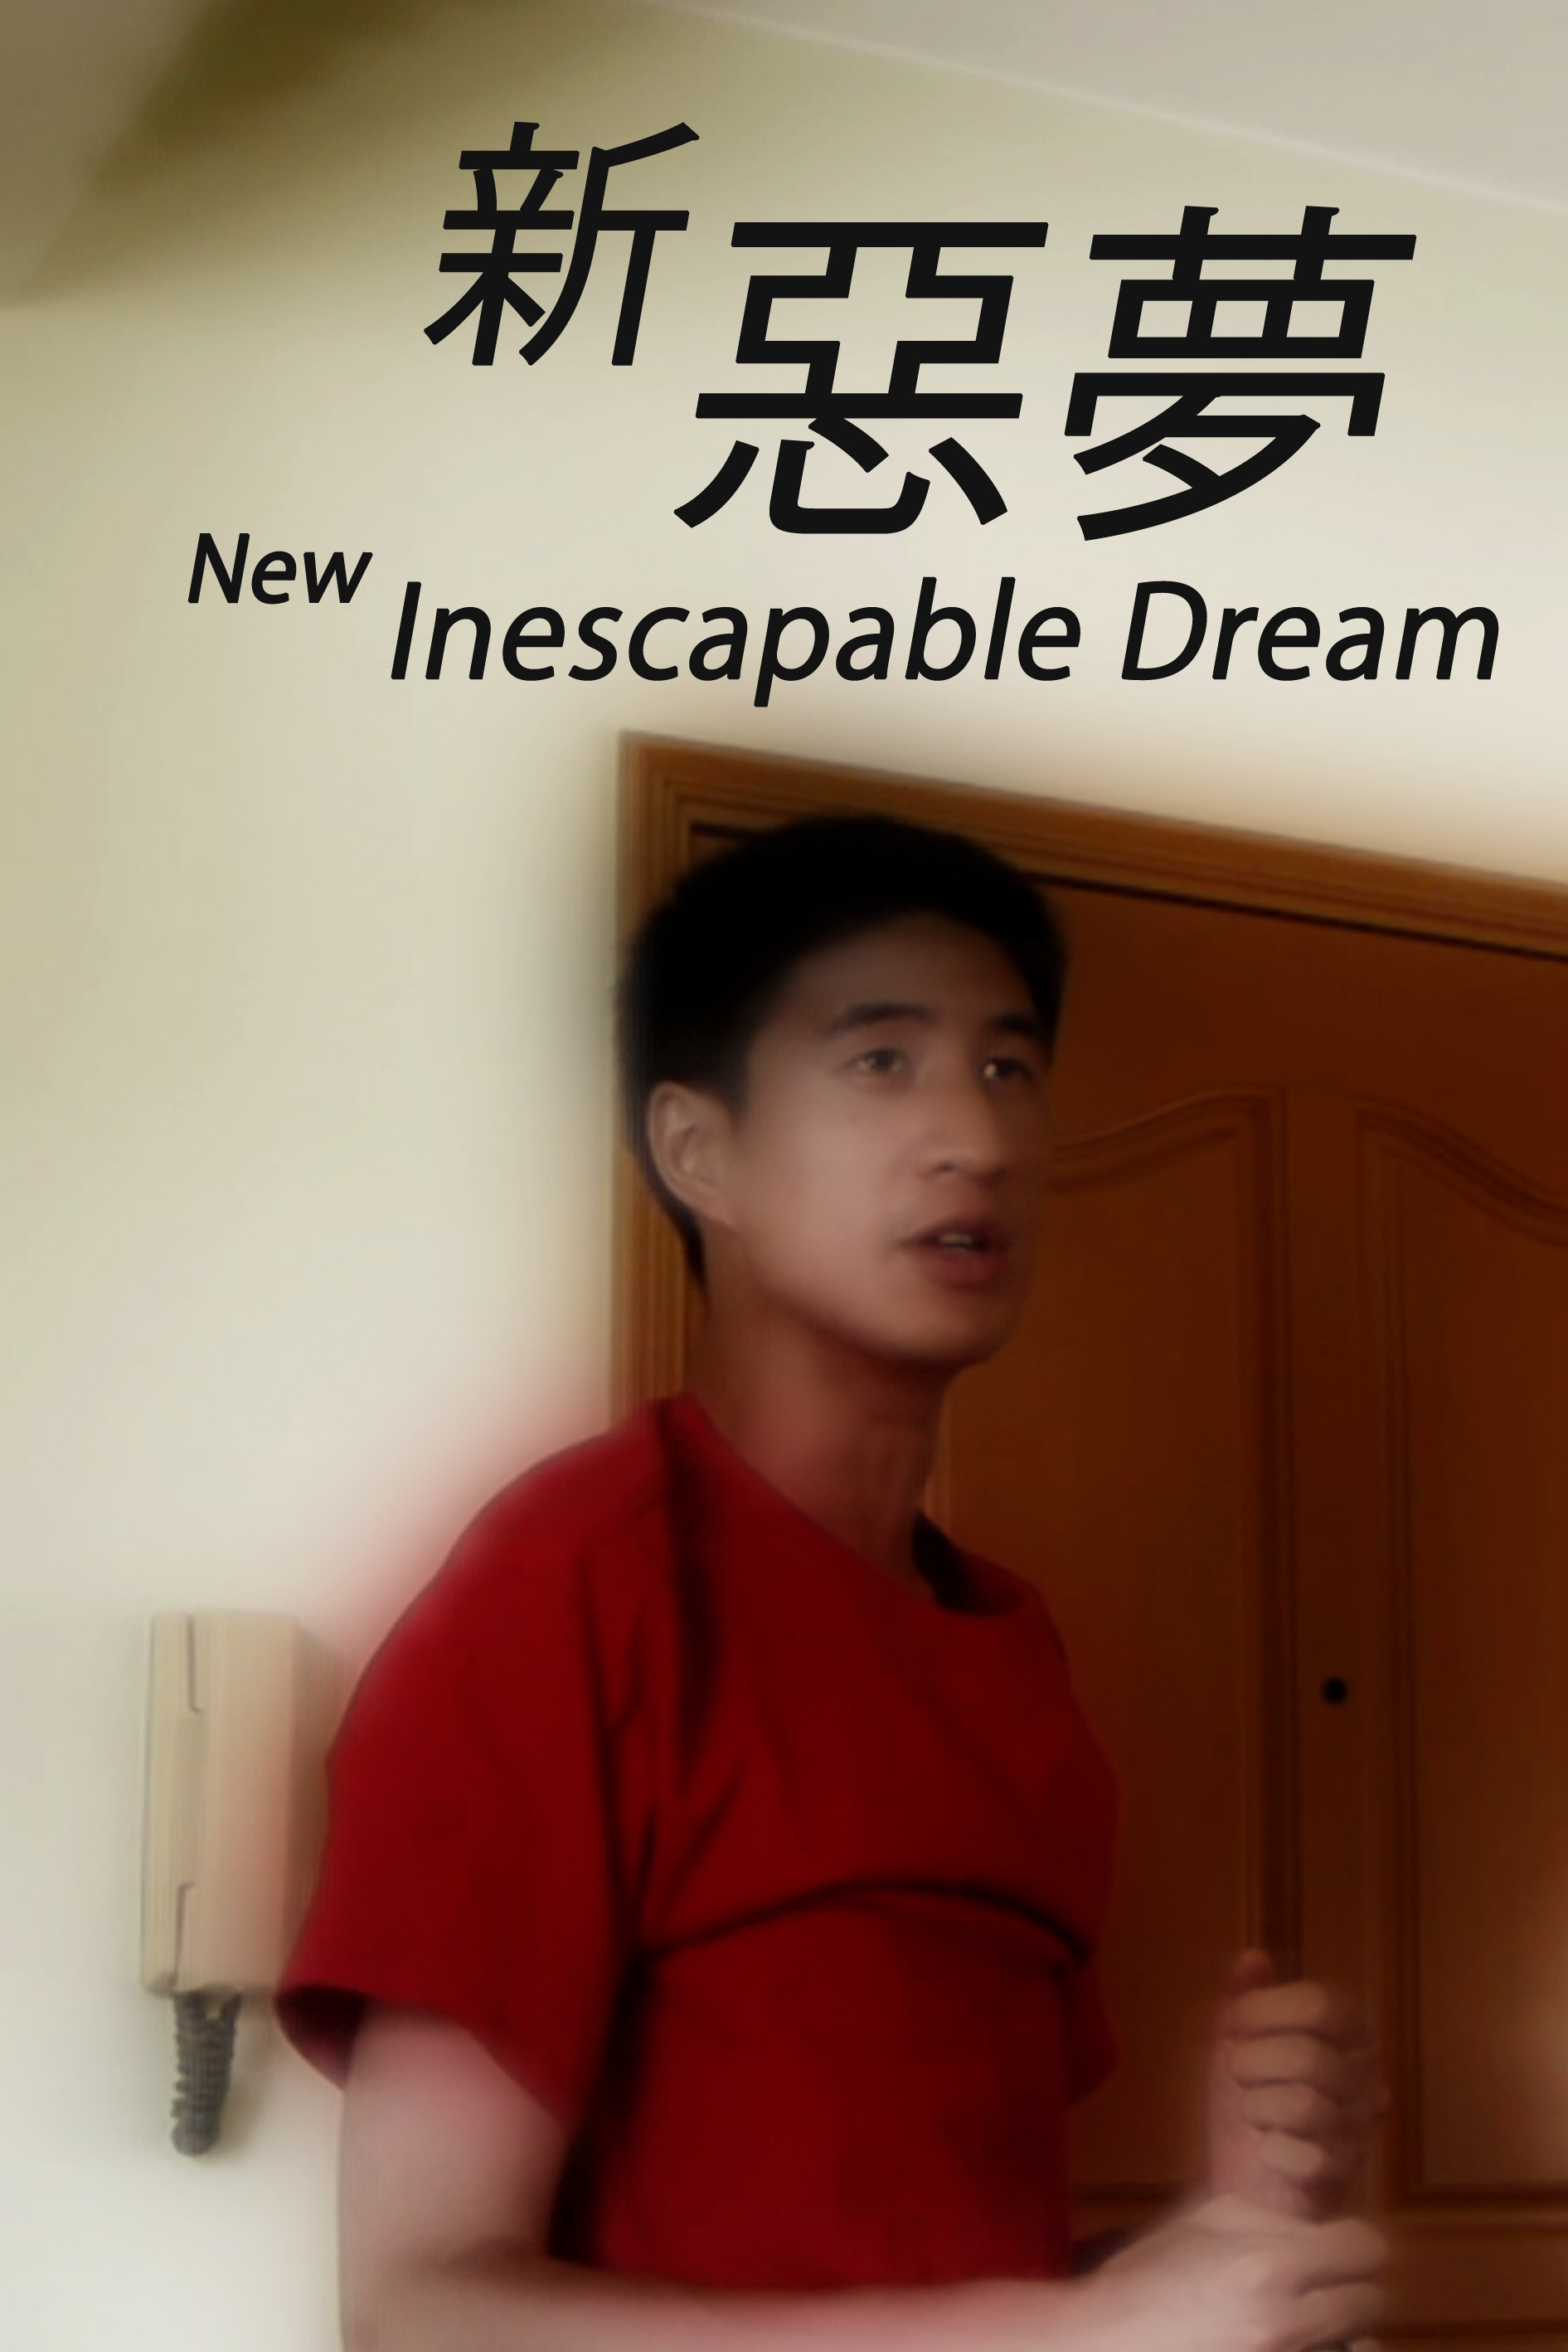 New Inescapable Dream